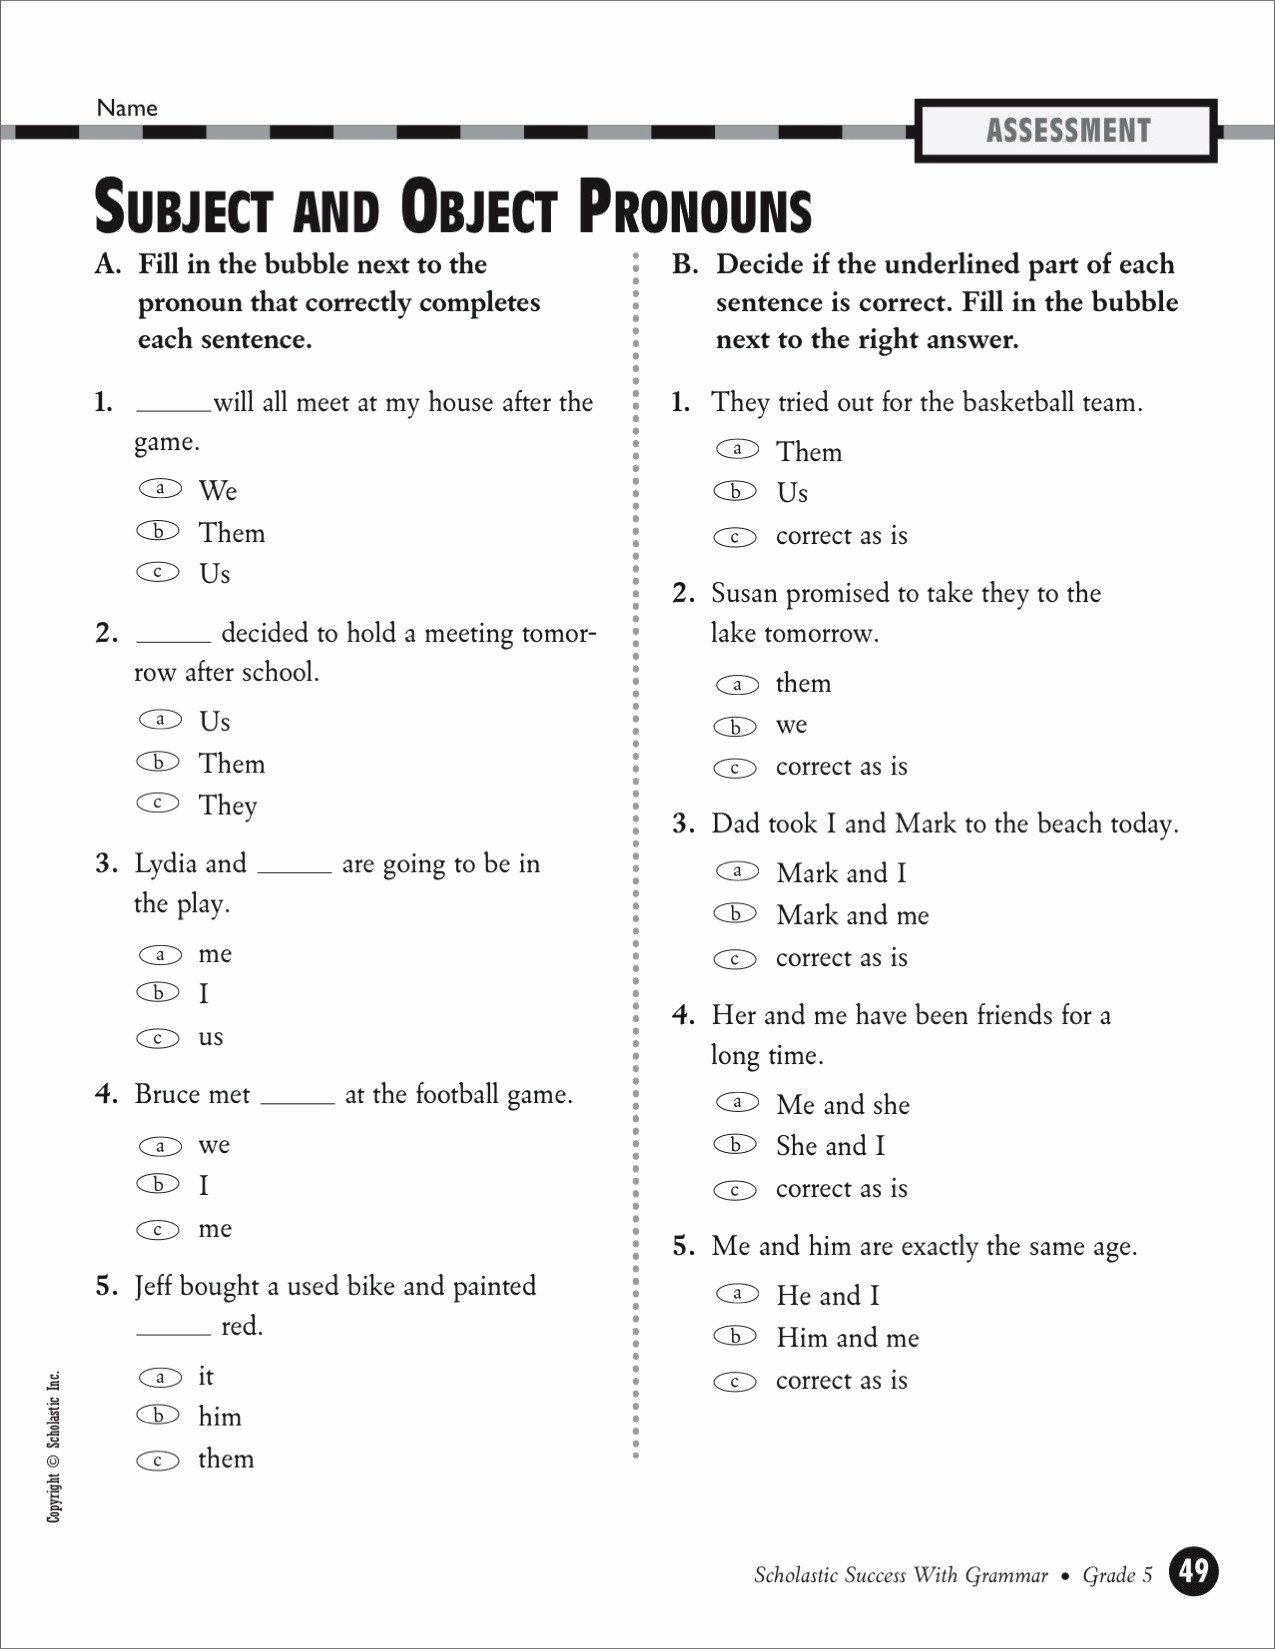 Pronoun Verb Agreement Worksheet Inspirational Pronoun Verb Agreement Worksheets 3rd Grade the Best